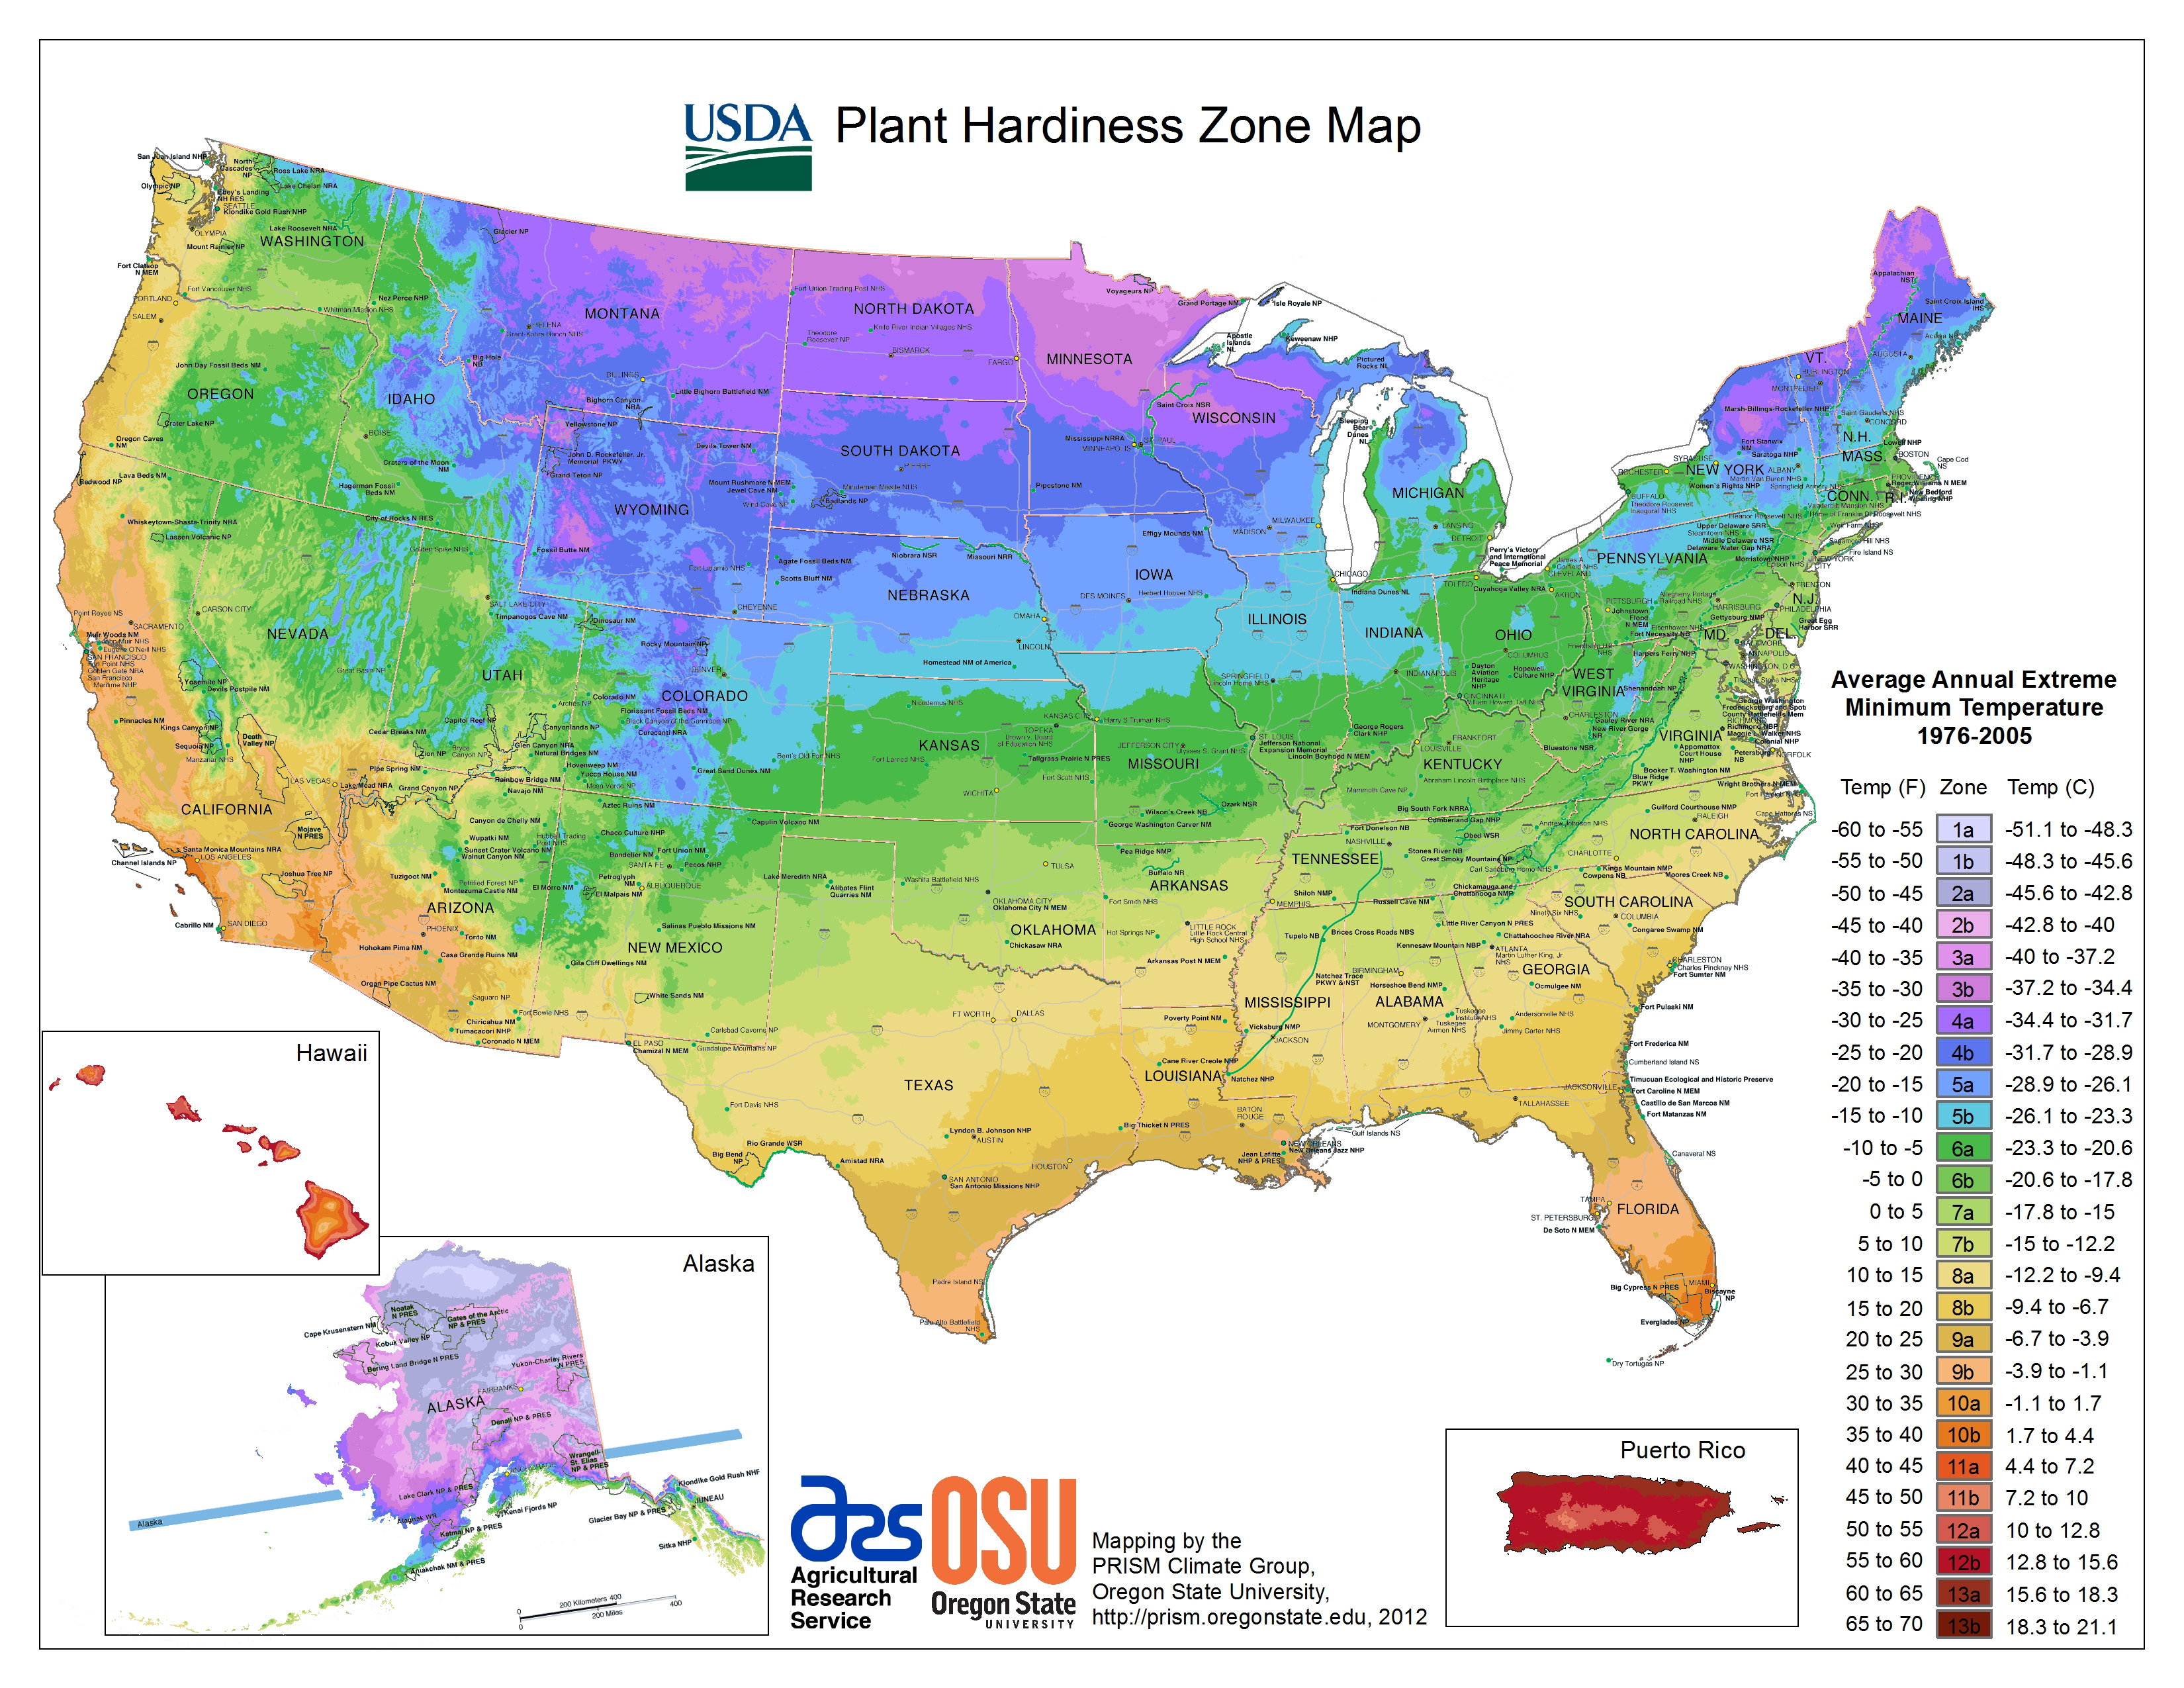 Florida Growing Zones Map Printable Maps